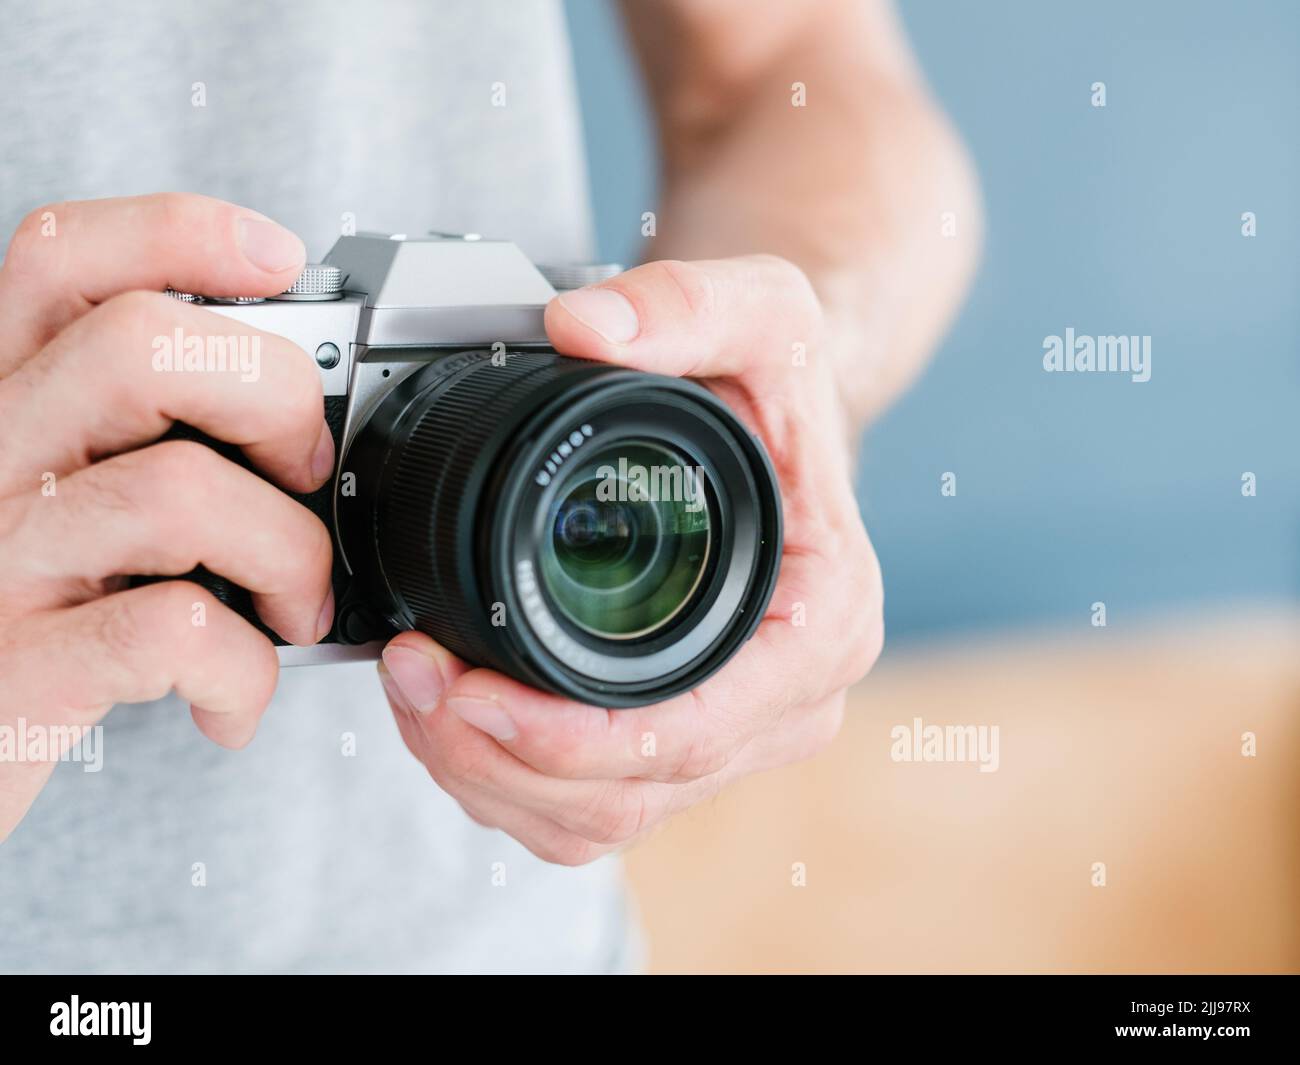 photography equipment technology man hold camera Stock Photo